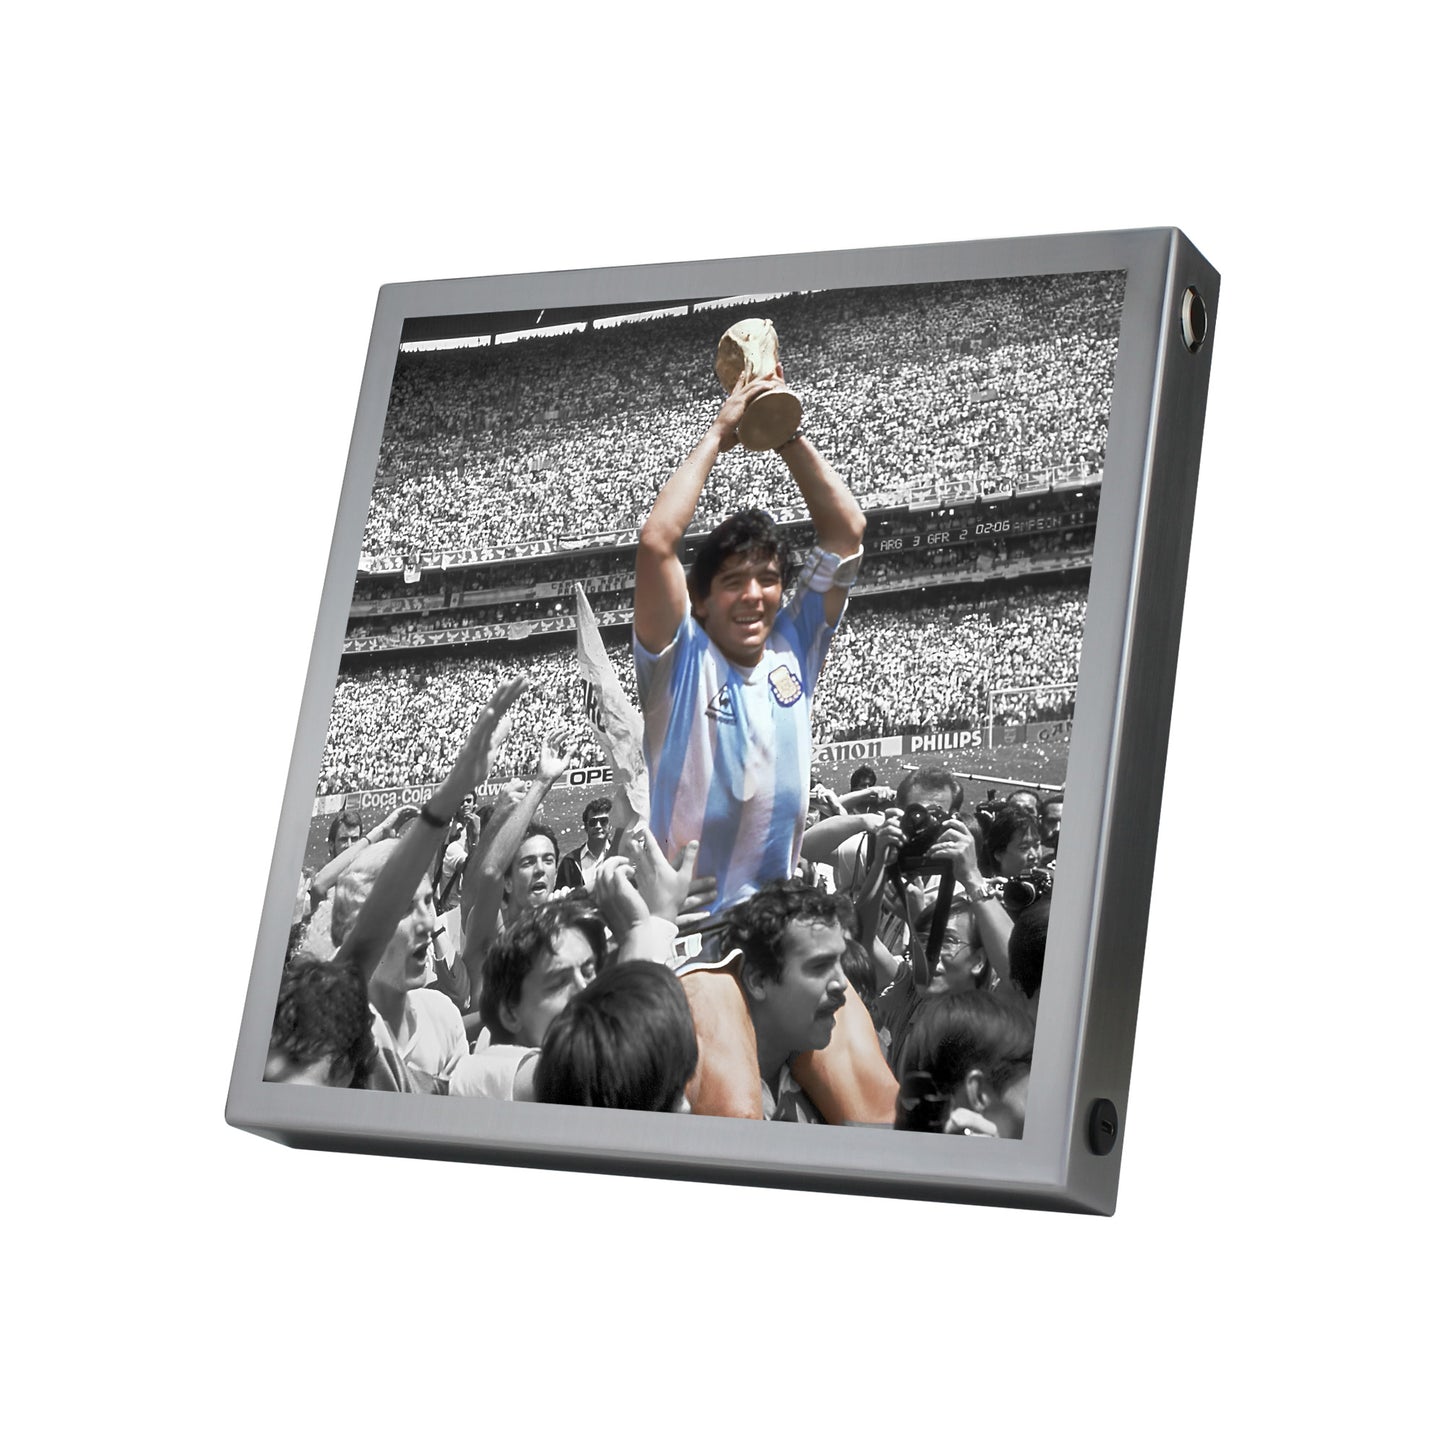 Diego Maradona - 1986 FIFA World Cup - Champions: Argentina